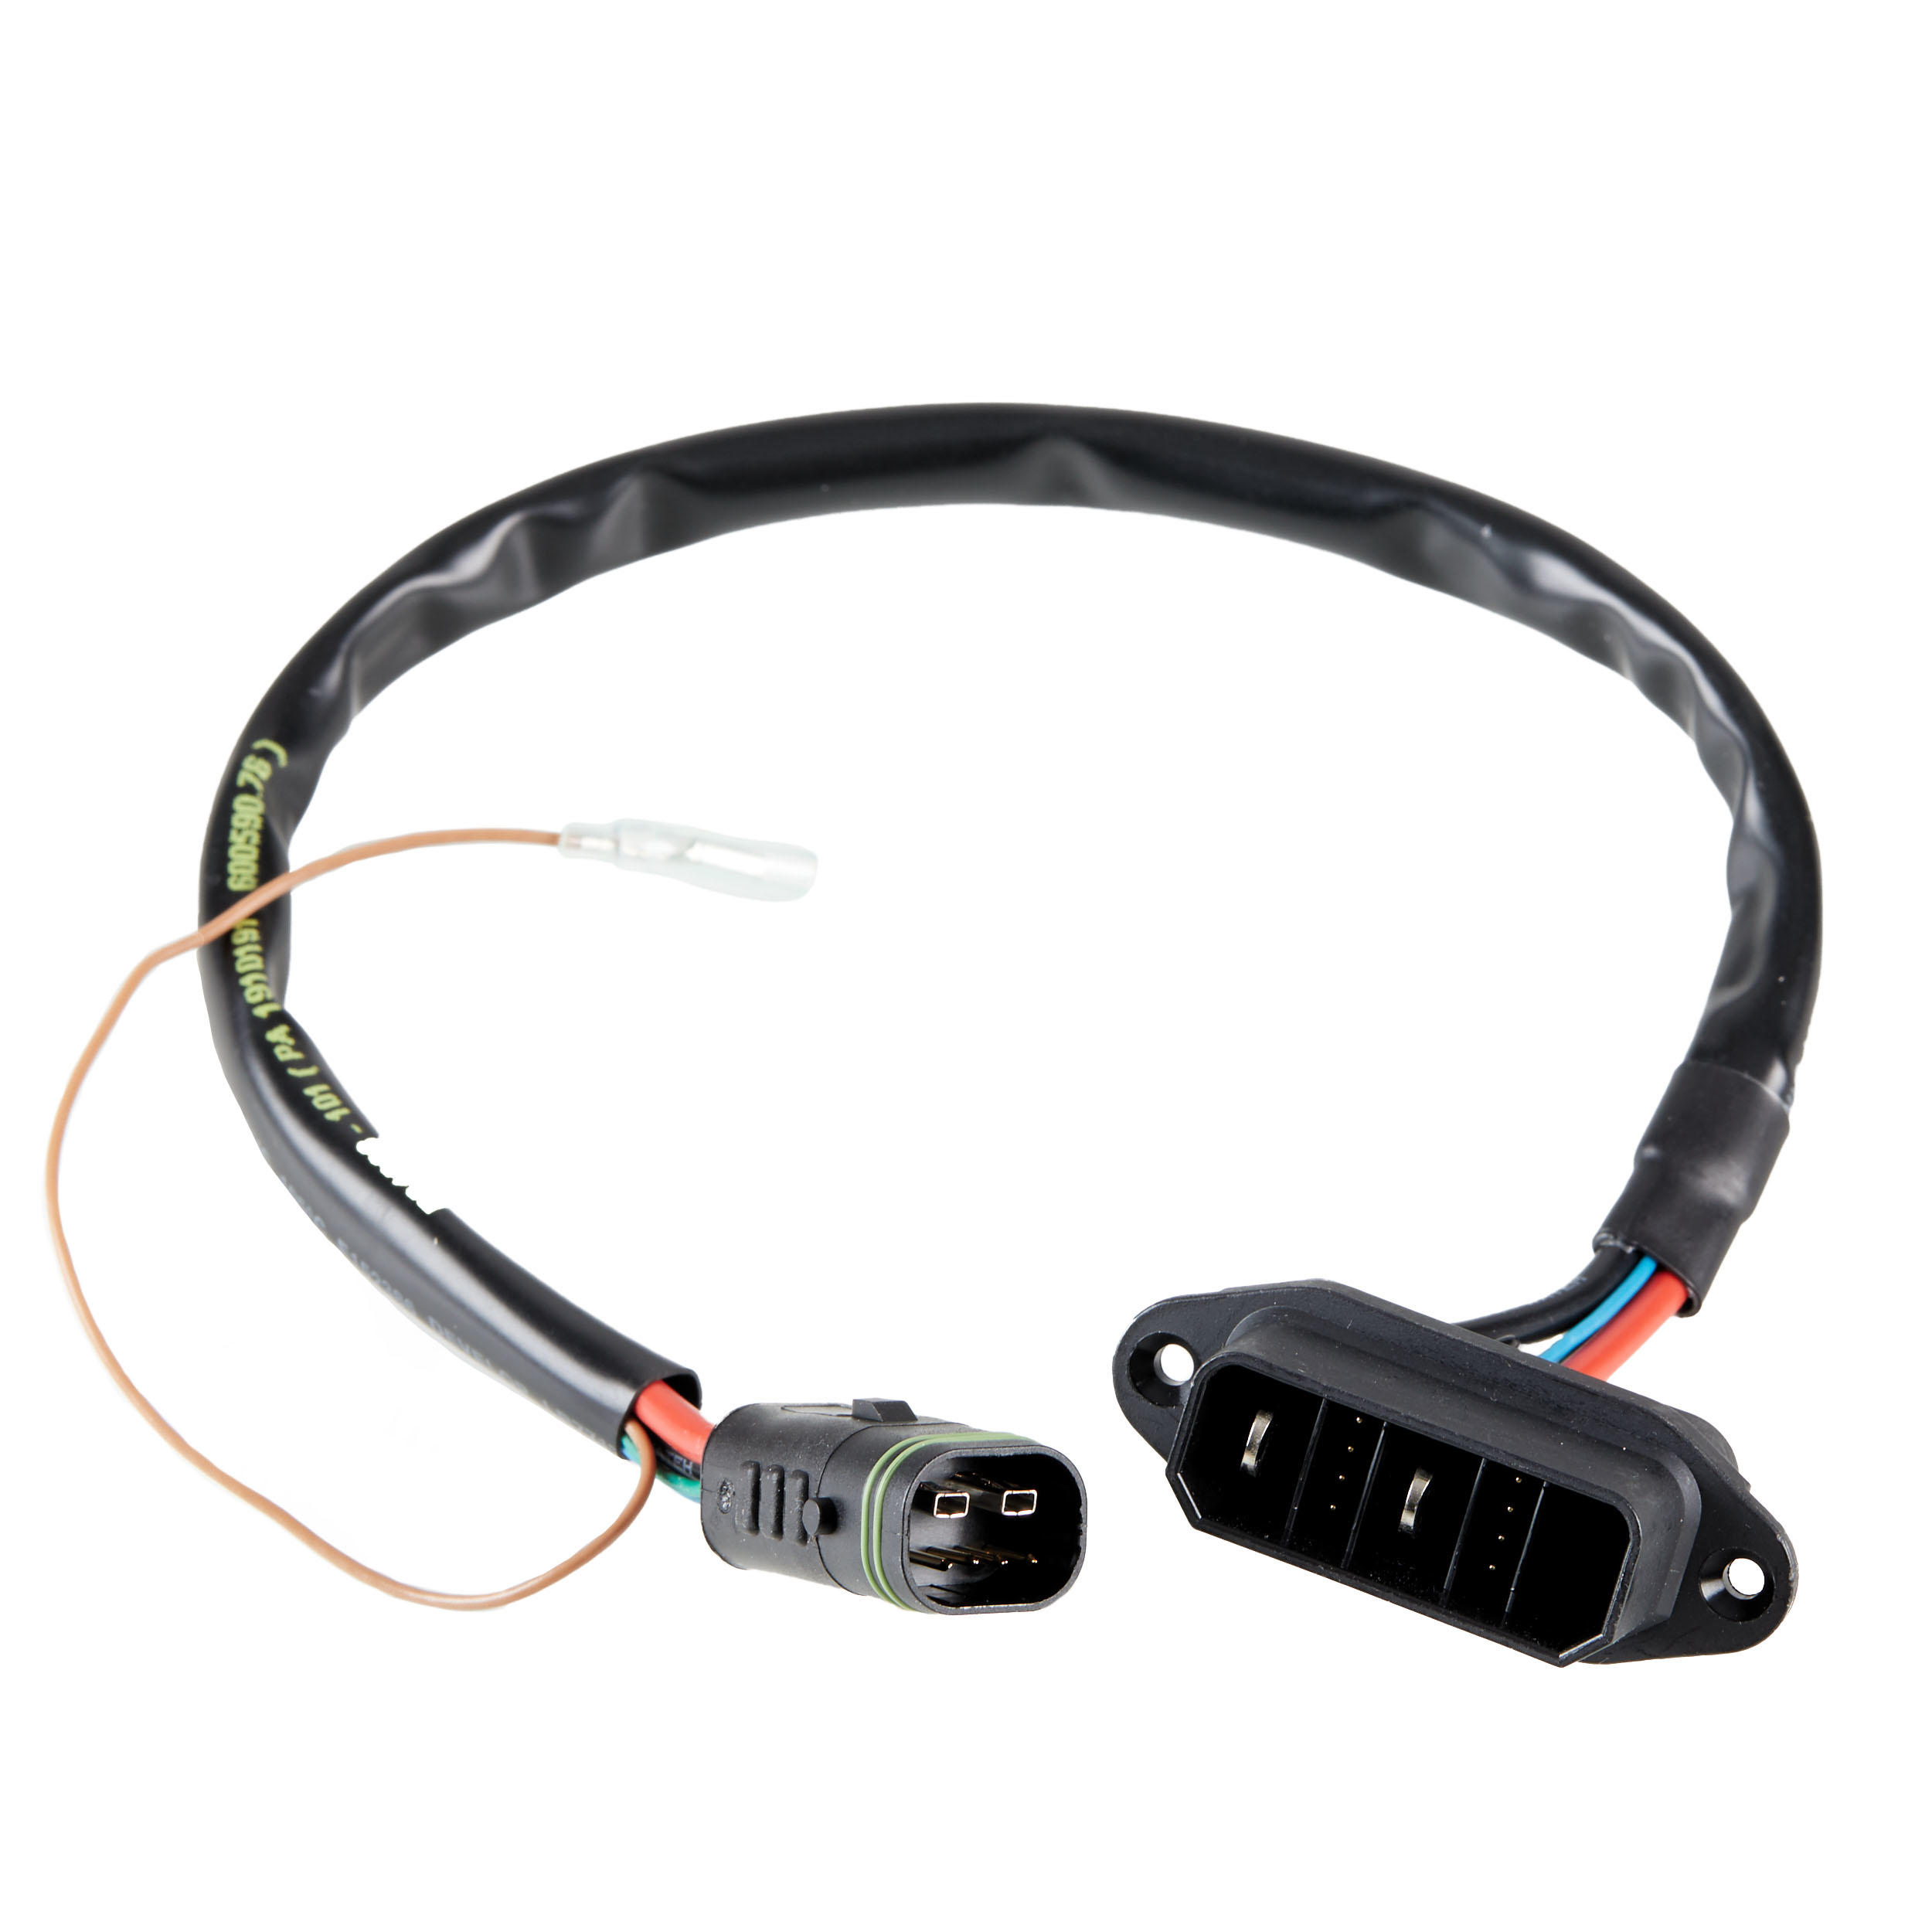 ROCKRIDER Cable Alimentation Moteur Brose 360mm - Pour E-St 500v3 / 520 900